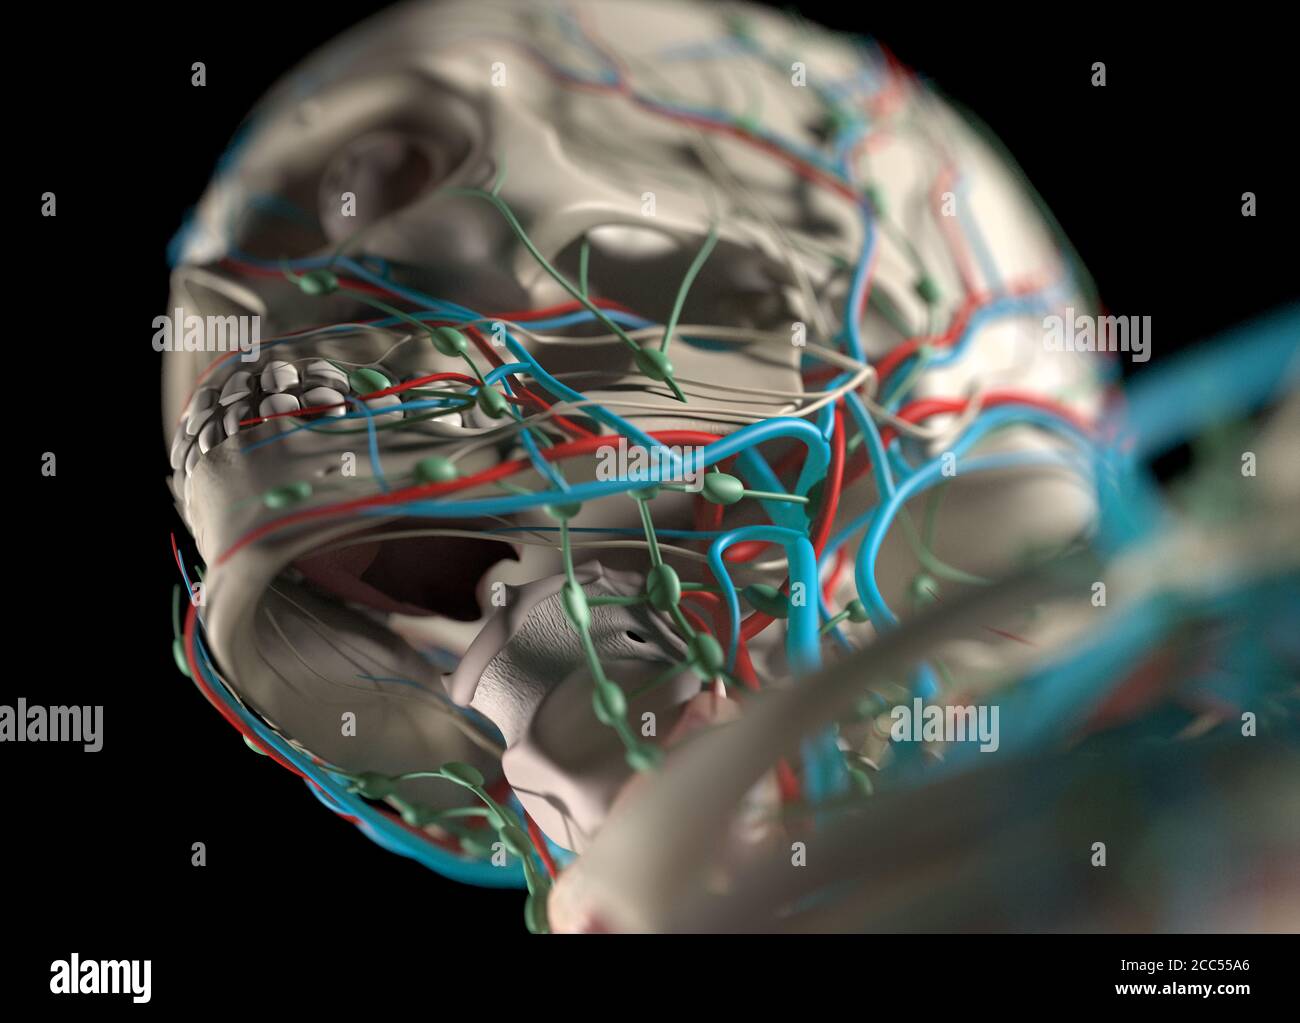 Anatomiedarstellung des menschlichen Gefäßsystems. Schultern, Hals, Kopf. Muskulär, Skelett. 3D-Illustration. Stockfoto